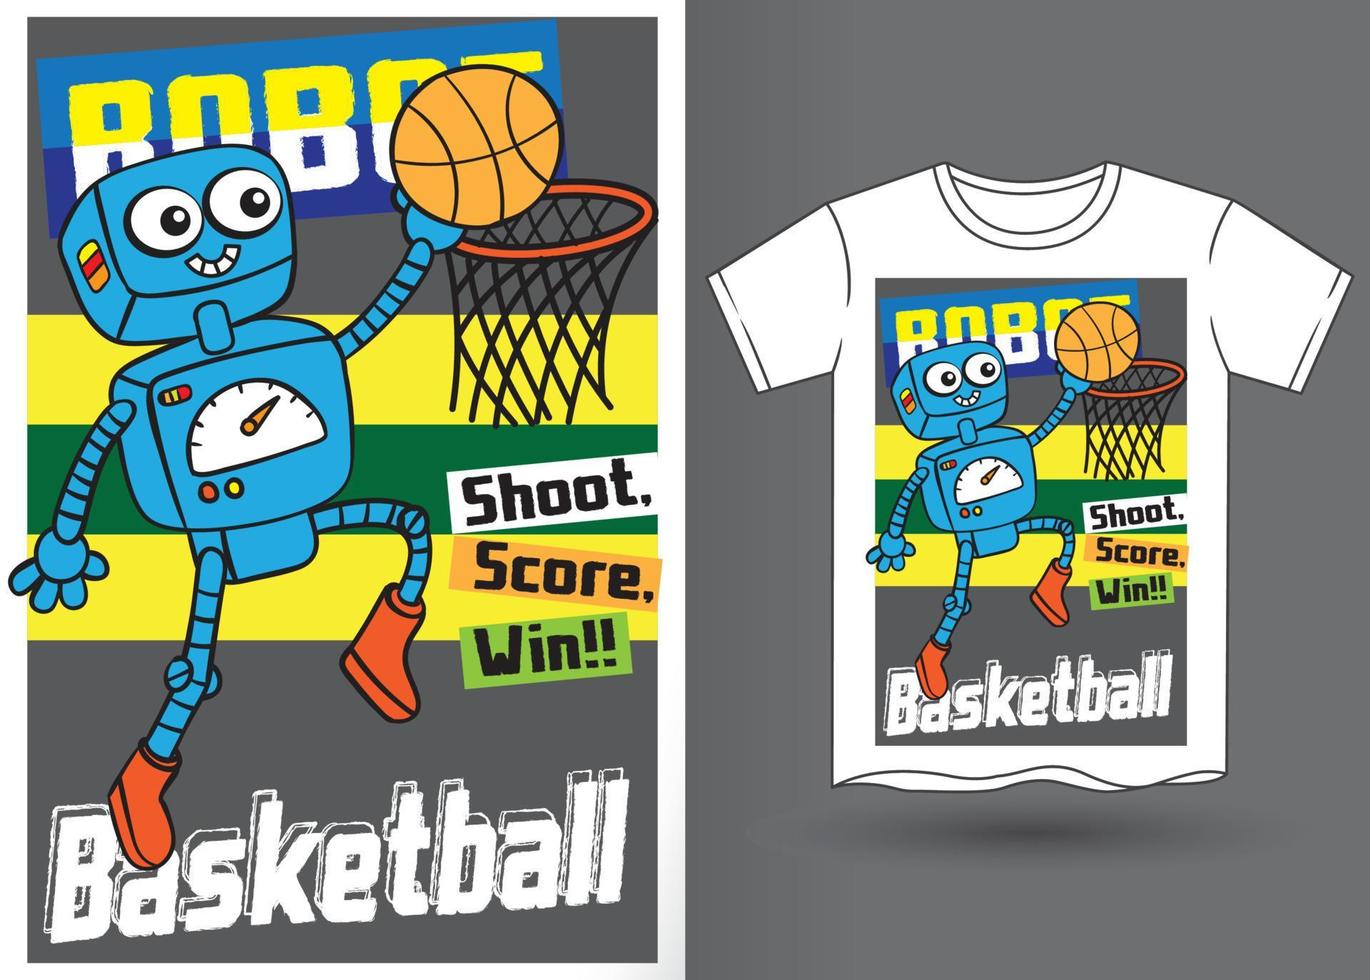 Robot basketball player illustration for t shirt vector